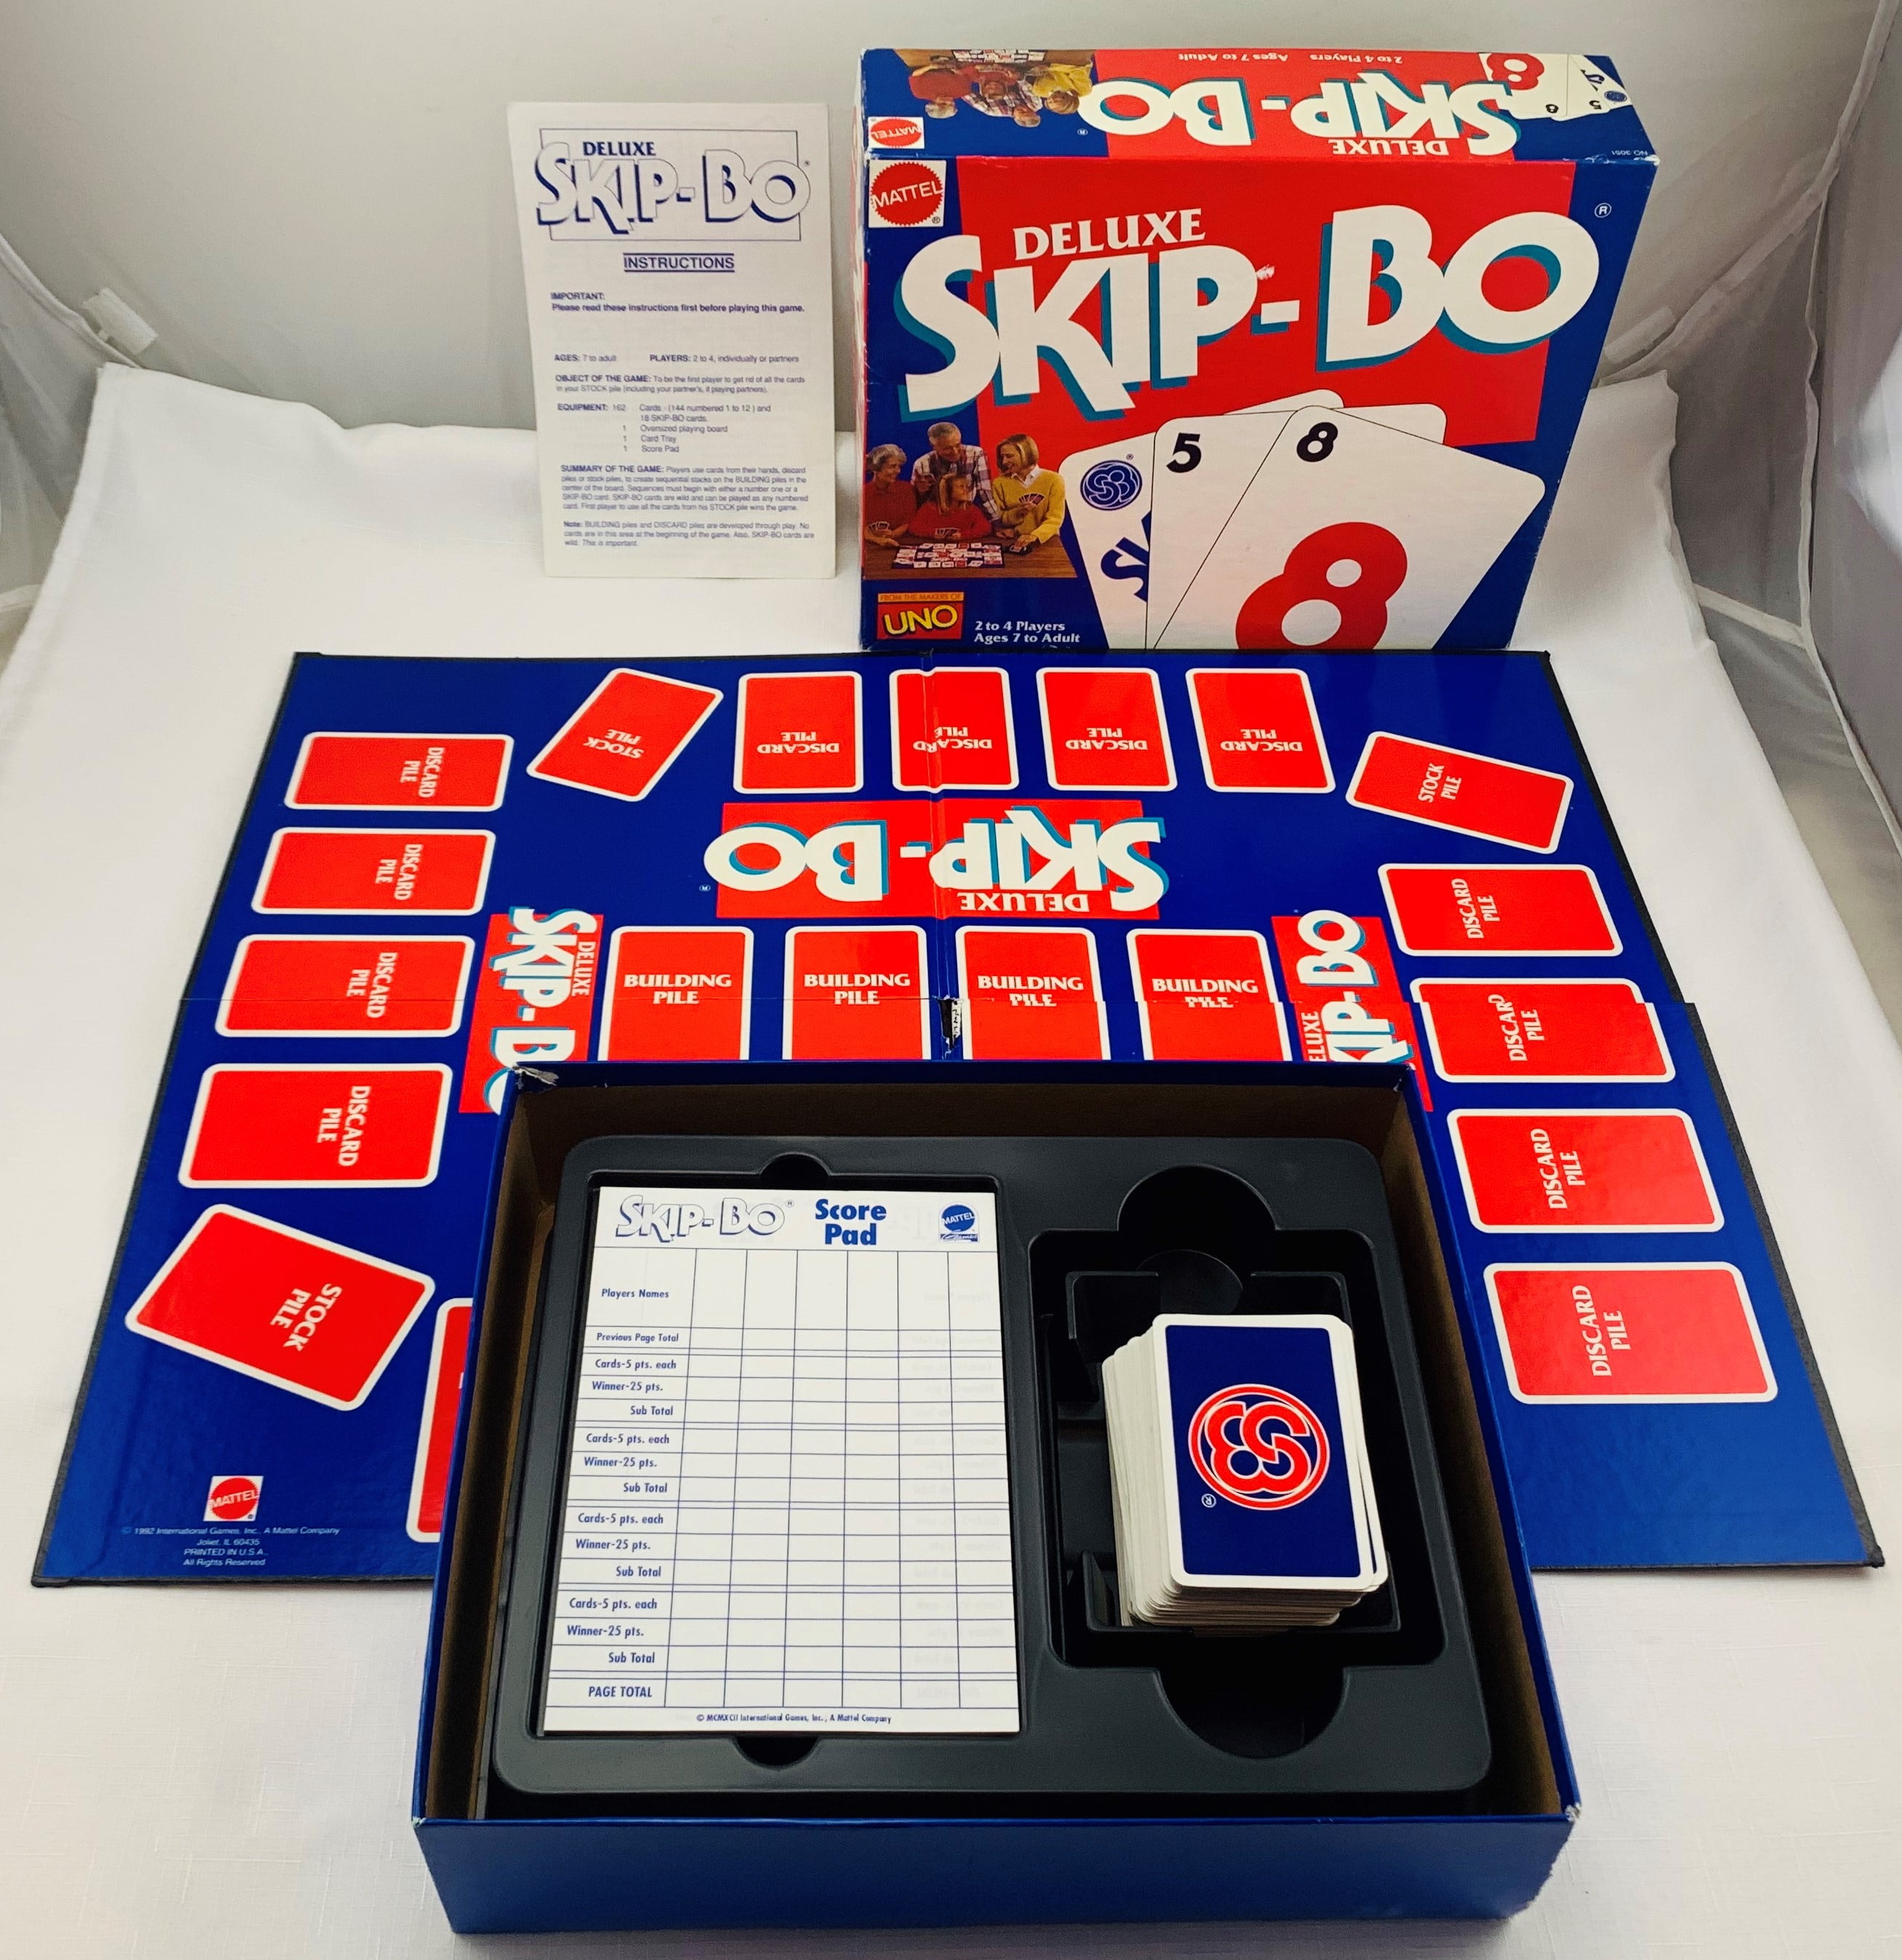 Vintage 1992 UNO Skip-bo Deluxe Card Game Complete Mattel for sale online 